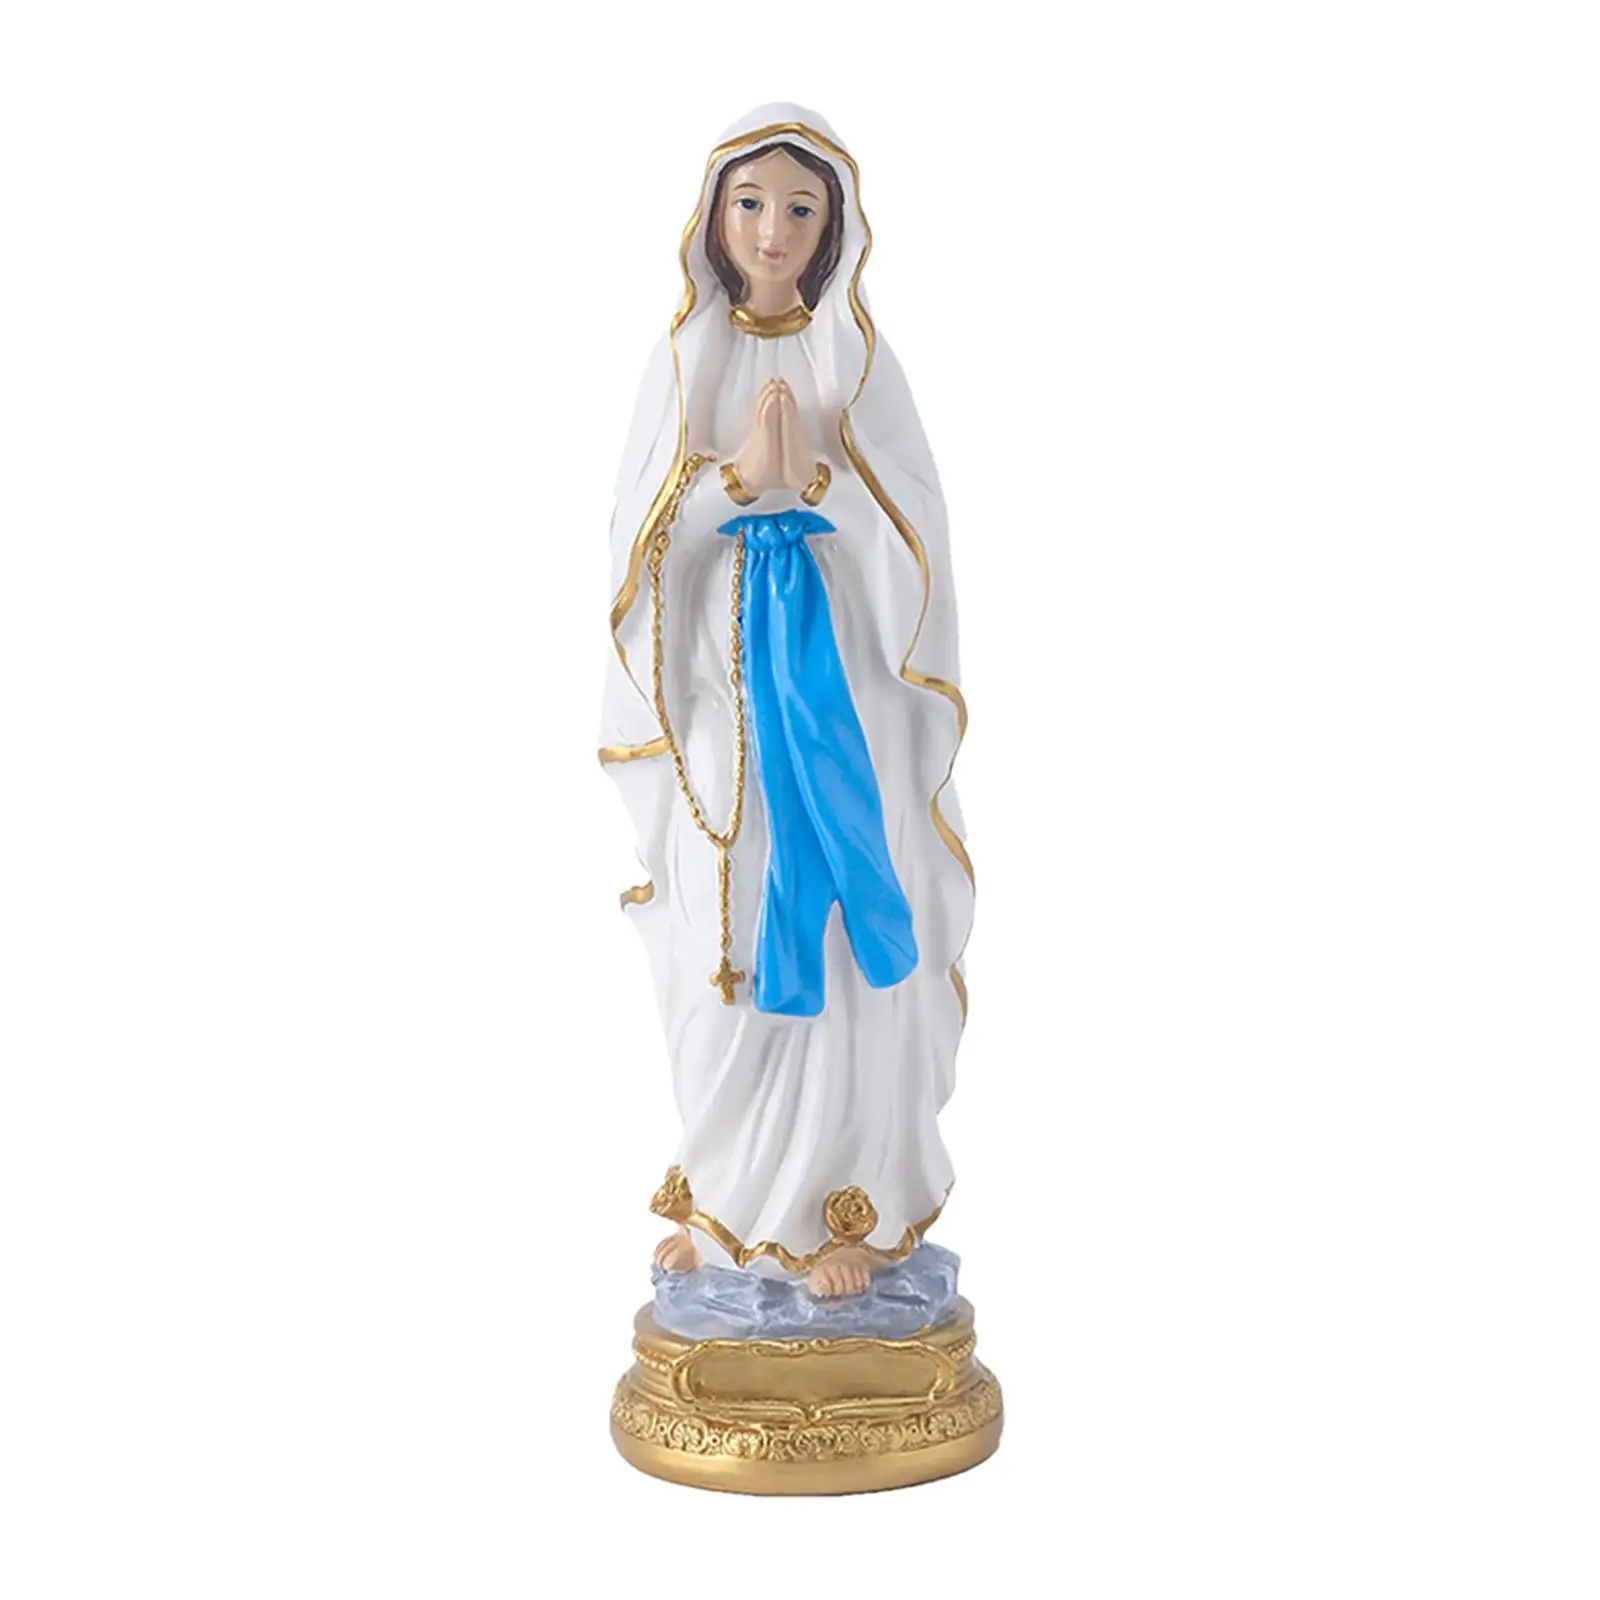 Resin Madonna Virgin Mary Statue Figurine Wedding Gift Xmas Home Tabletop Decorative